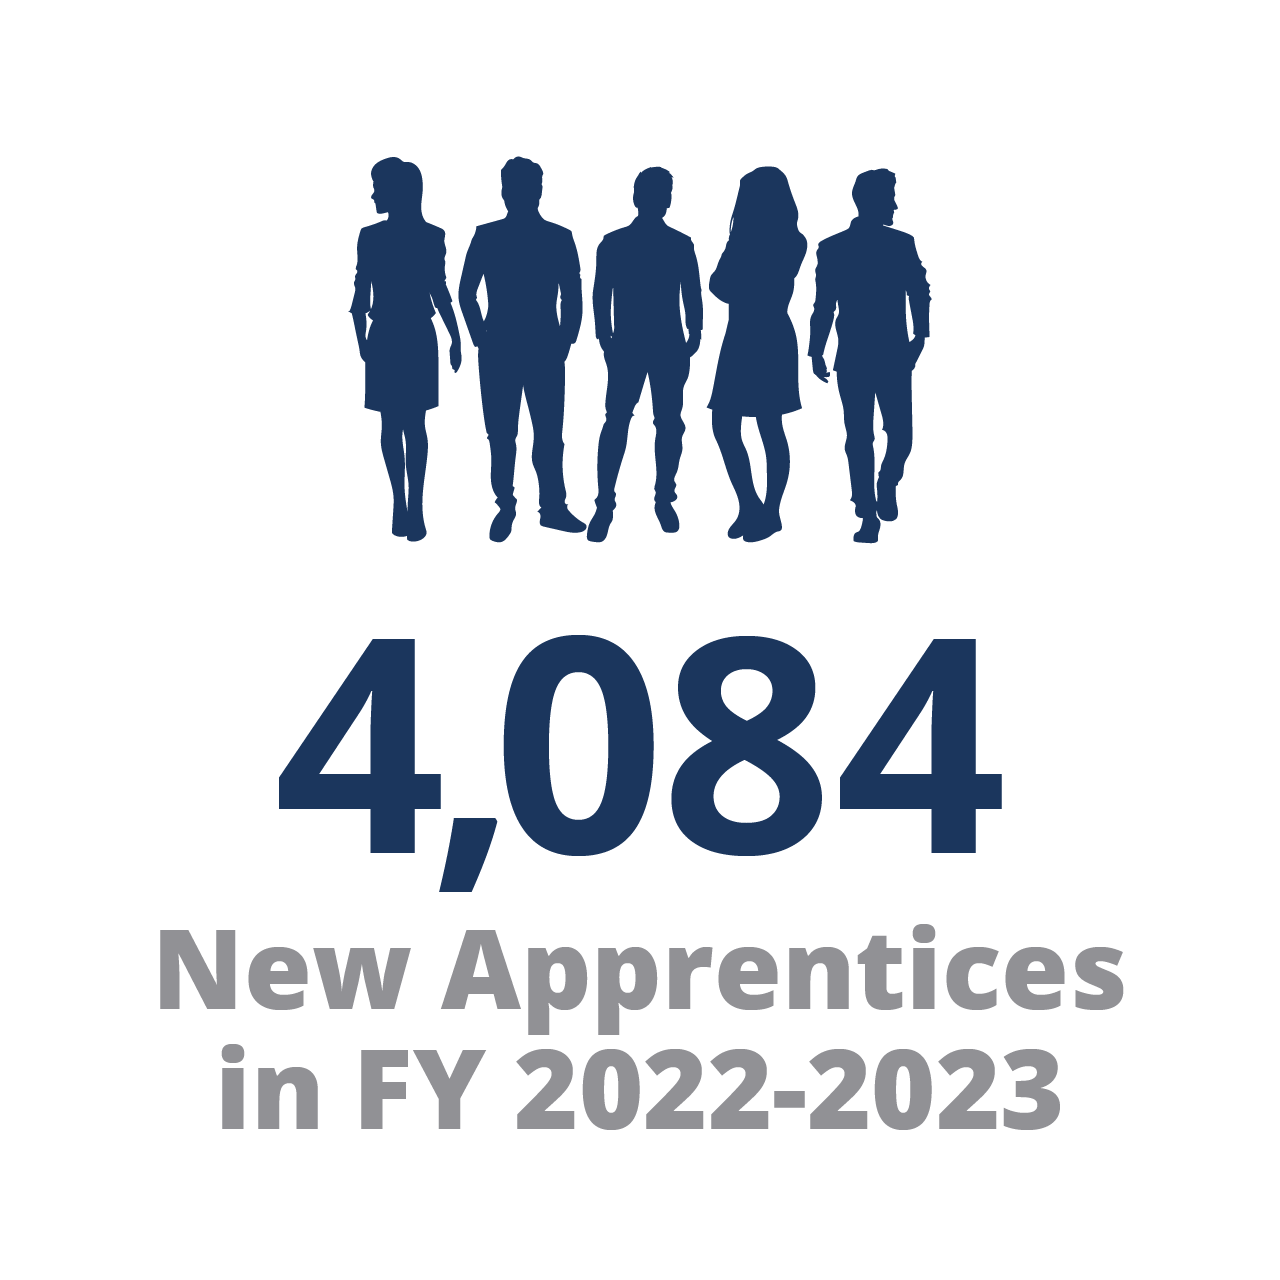 3,123 New Apprentices in 2022